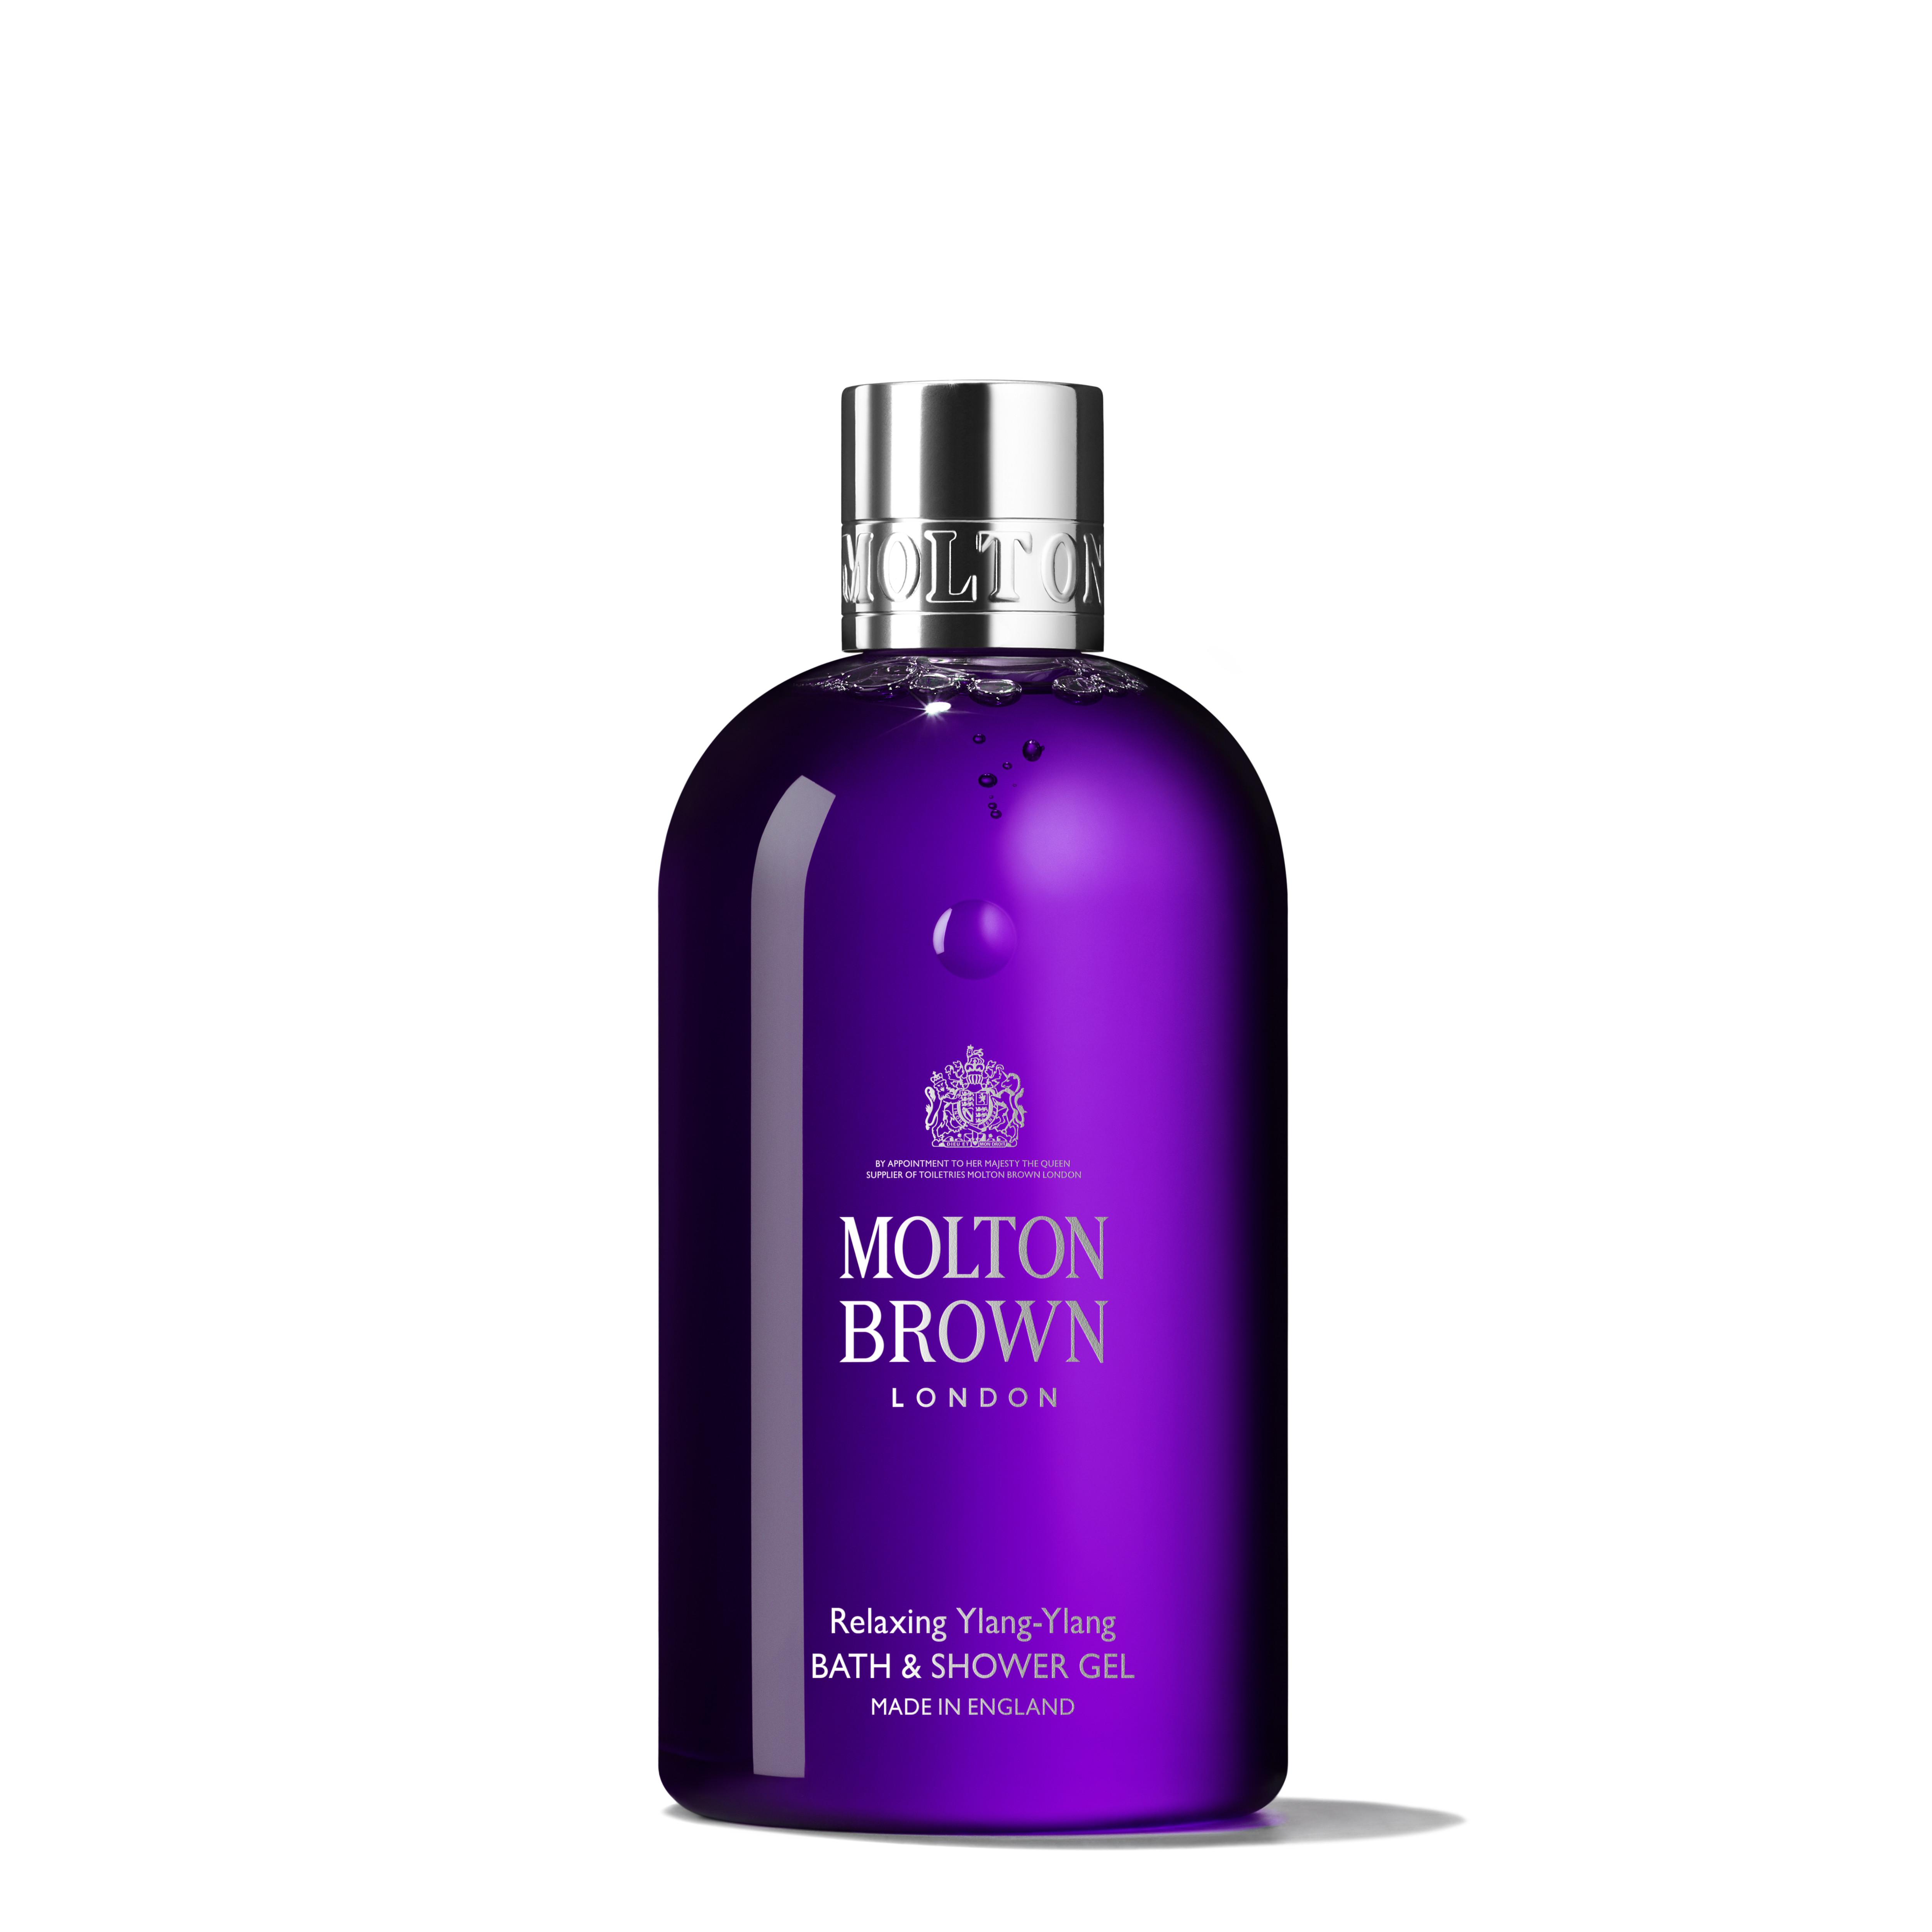 Molton Brown Relaxing Ylang-Ylang Bath & Shower Gel - 300ml